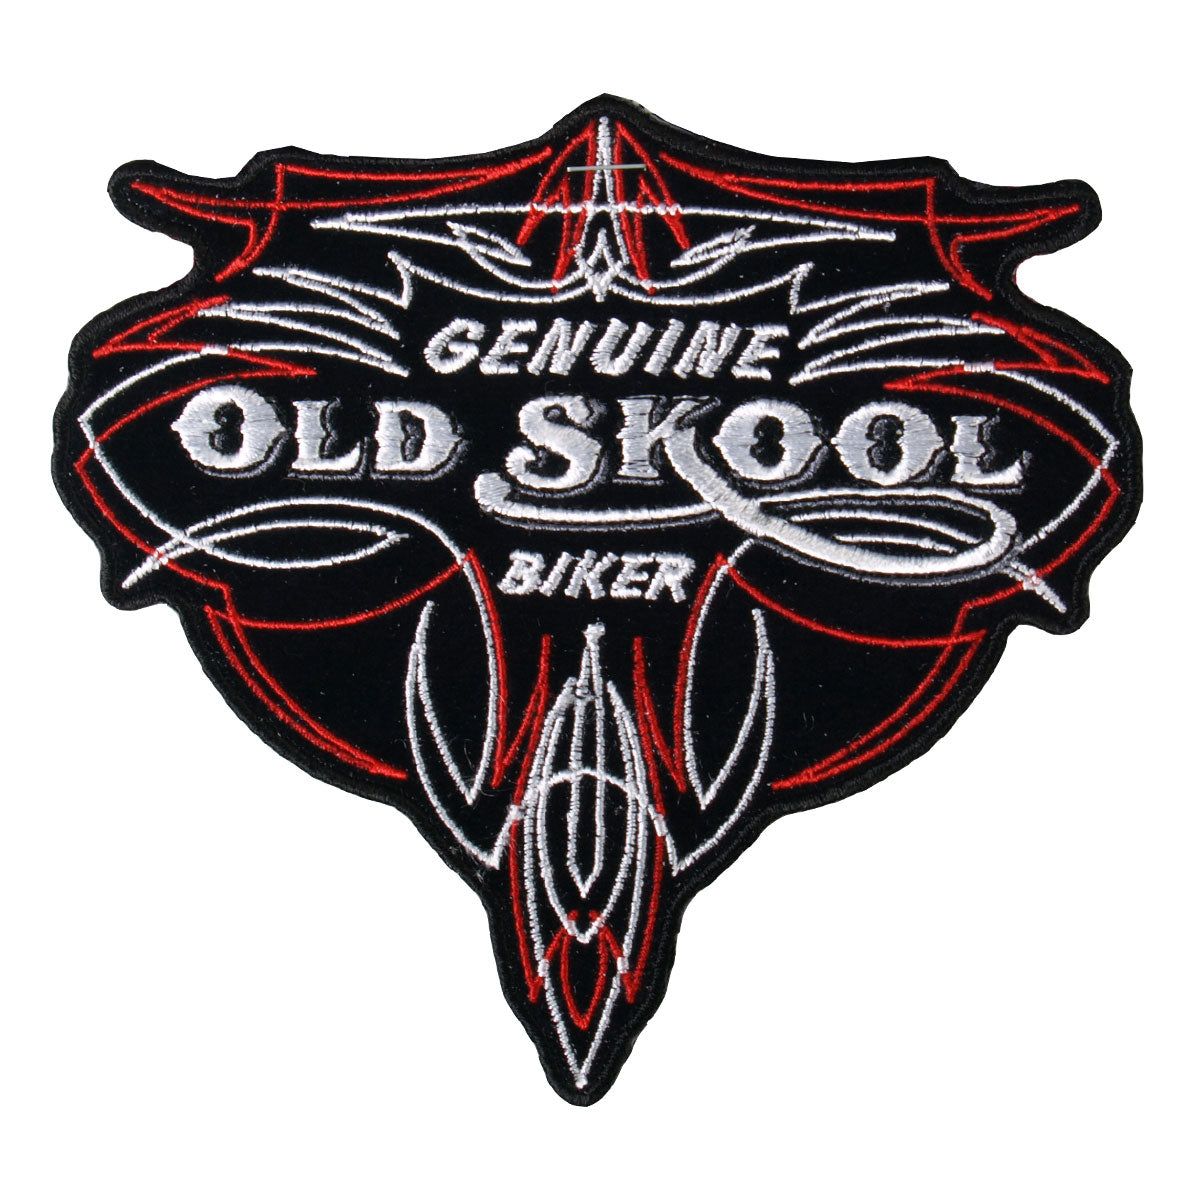 Hot Leathers Genuine Old Skool Biker Pinstripe 5" x 5" Patch PPA5280